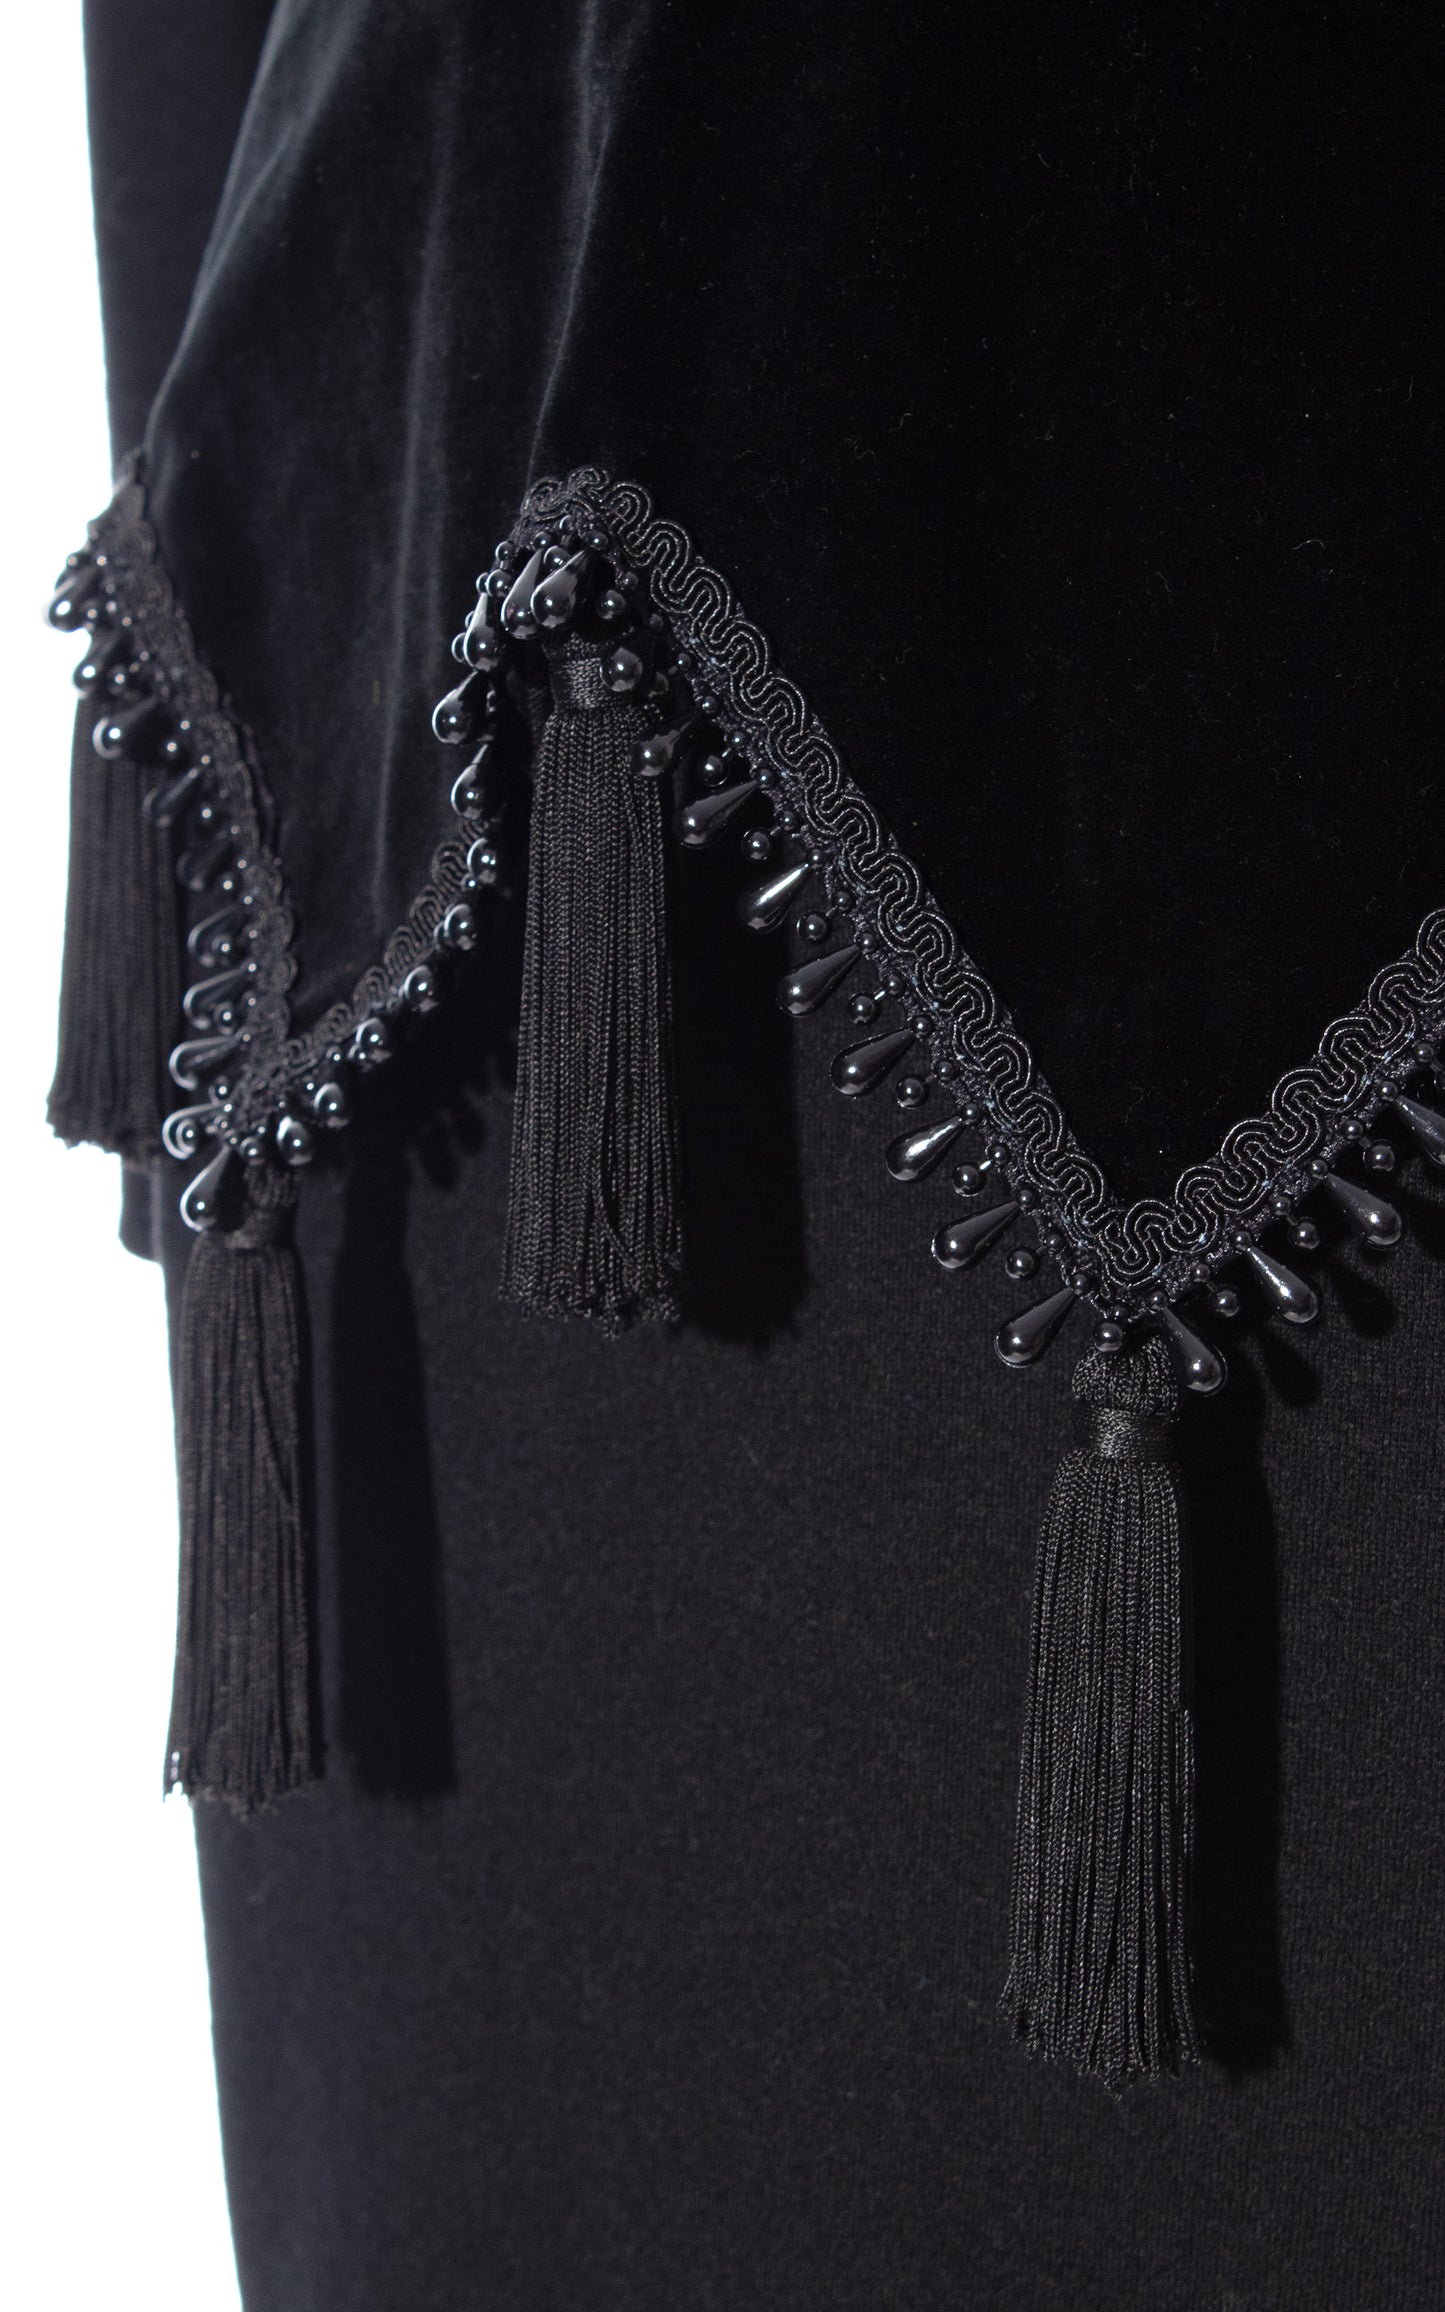 Vintage 80s 1980s Beaded Tassels Wool Jersey & Velvet Dress BirthdayLifeVintage